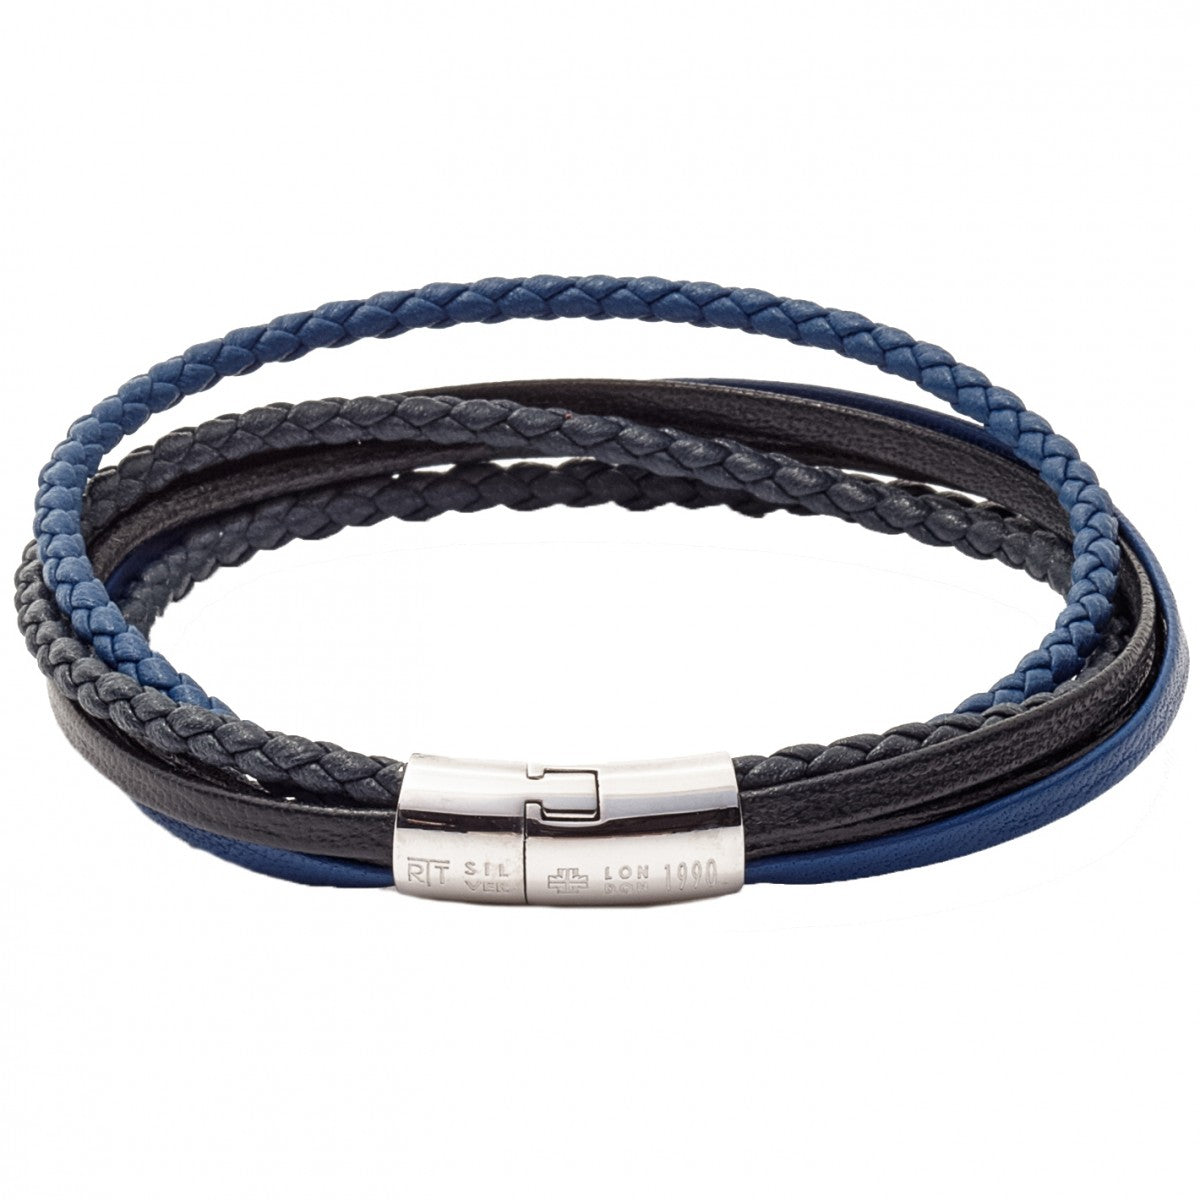 Tateossian Cobra Royal Blue Bracelet, Silver Clasp